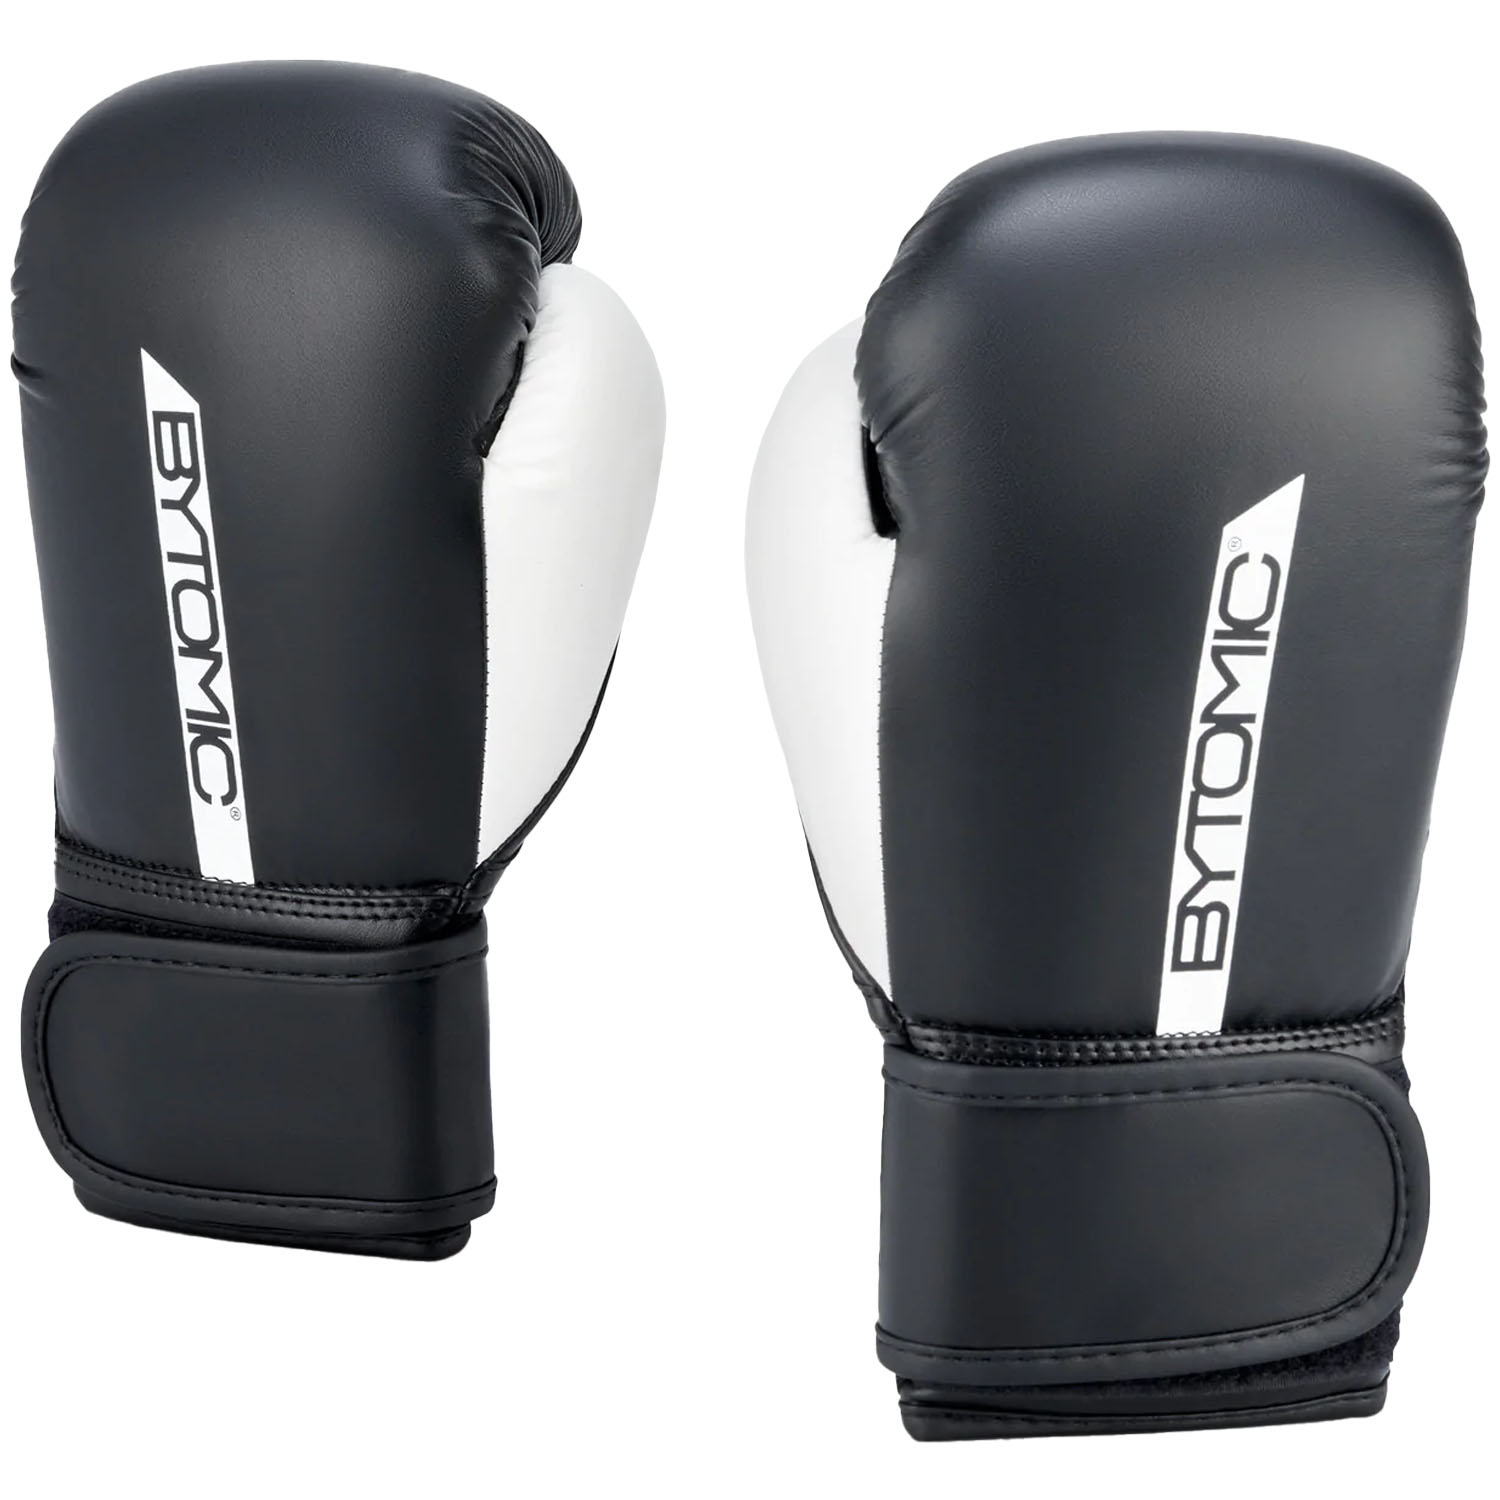 Bytomic Boxing Gloves, red Label, black-white, 10 Oz